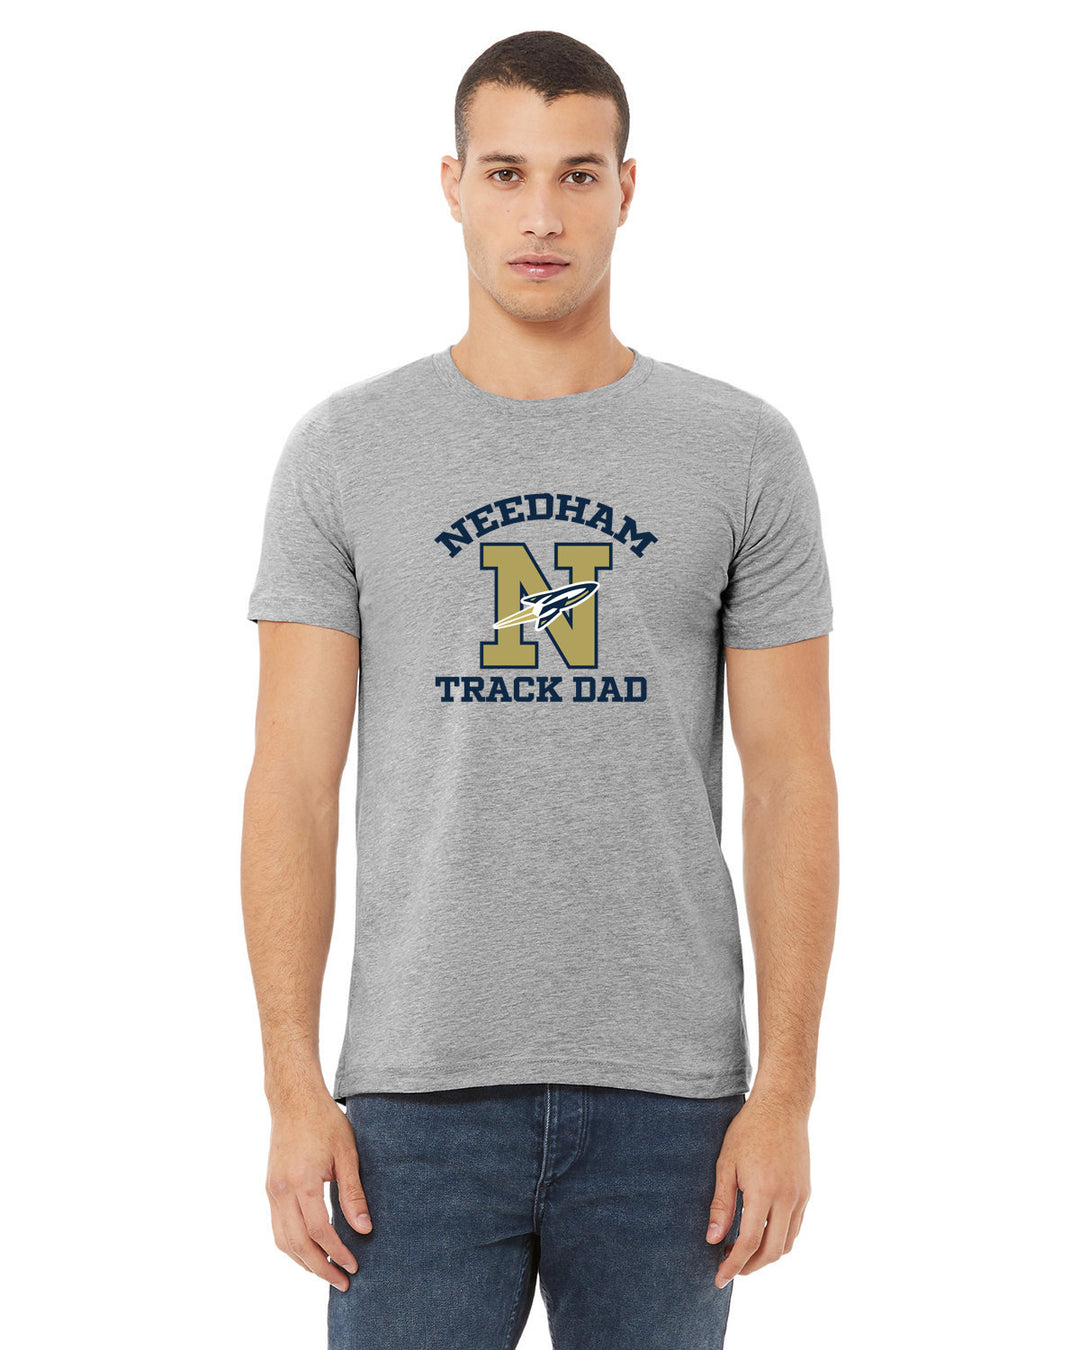 Needham "Track Dad" T-Shirt (3001CVC)